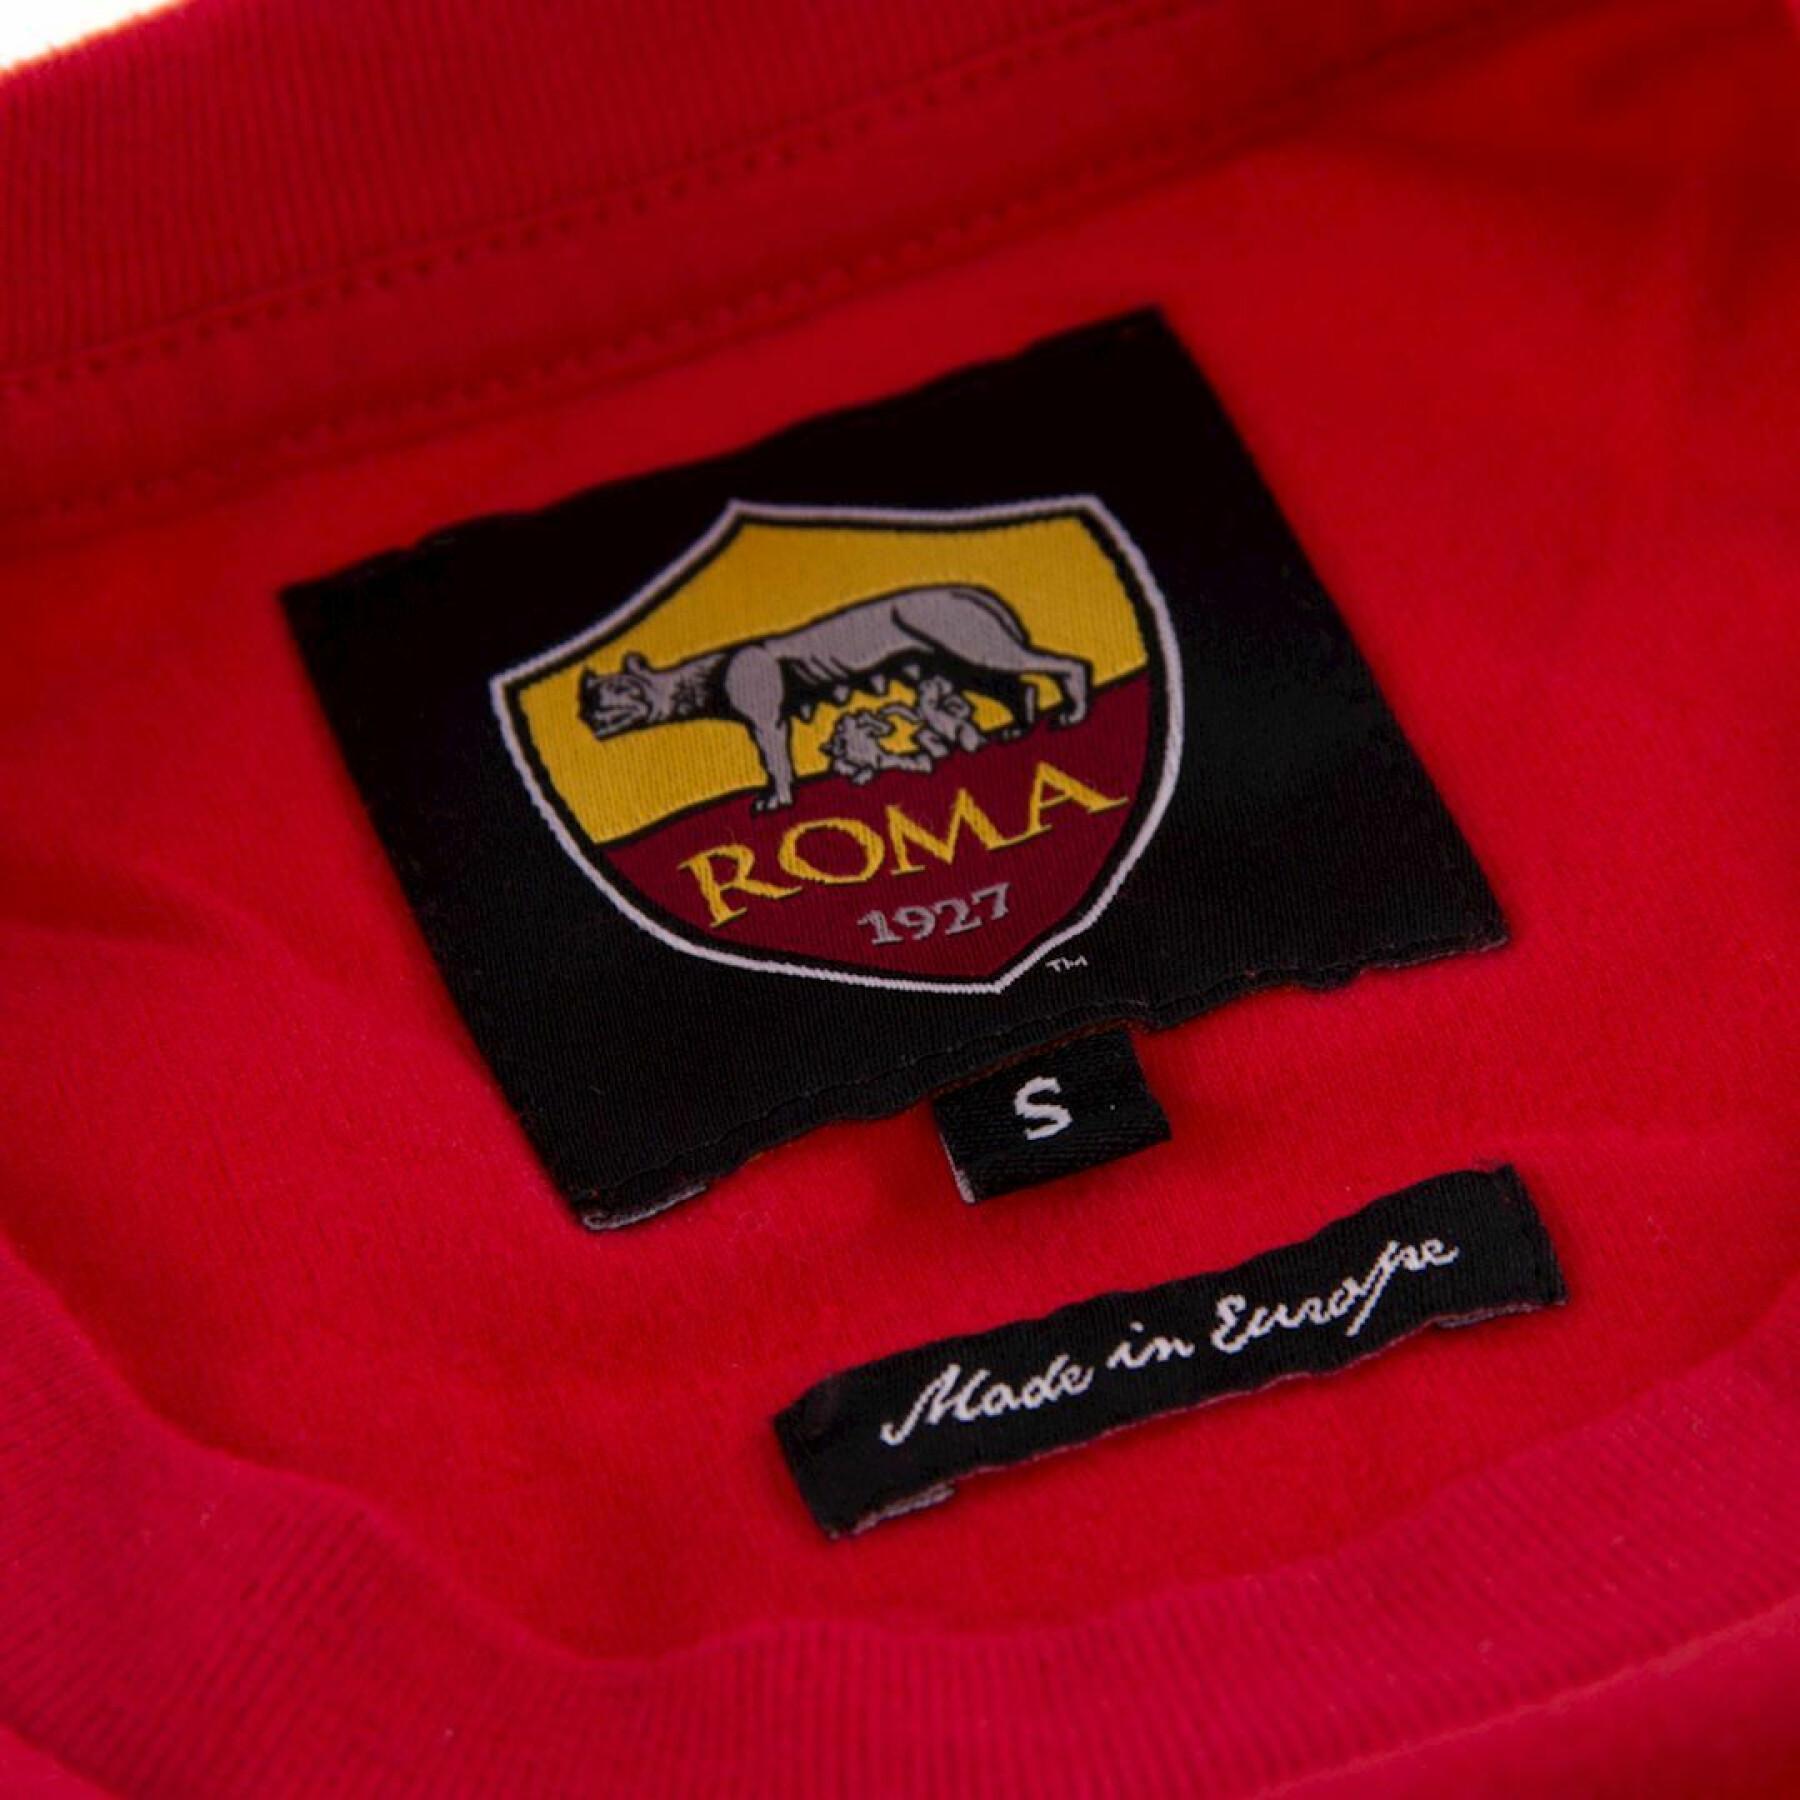 T-shirt tifoso AS Roma